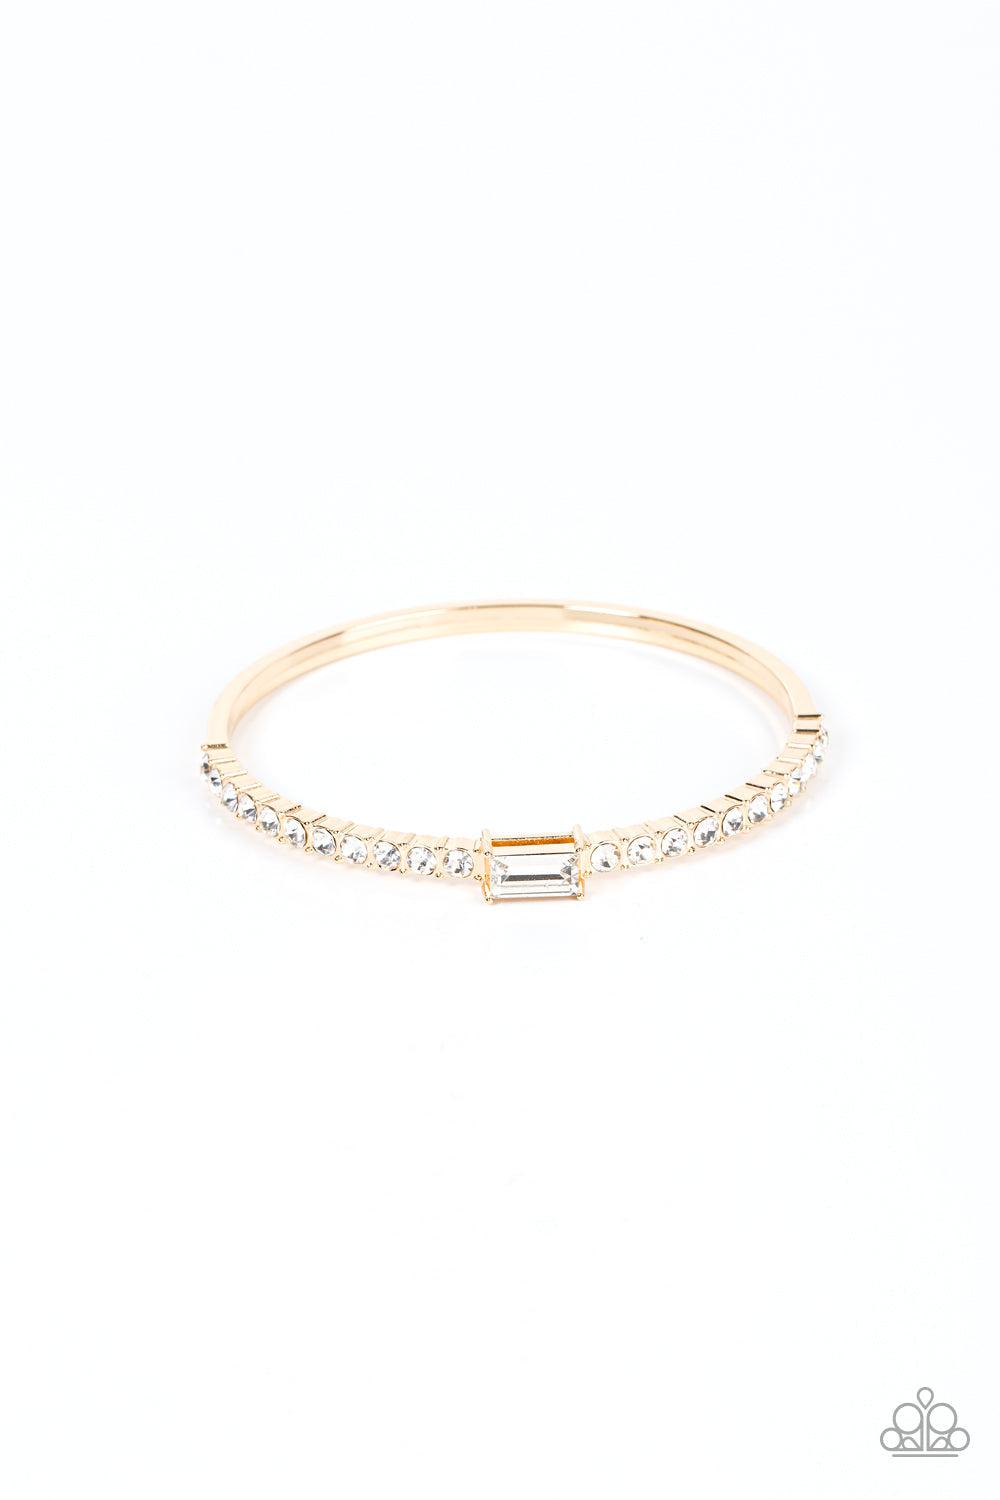 Party Crashing Couture Gold &amp; White Rhinestone Bangle Bracelet - Paparazzi Accessories- lightbox - CarasShop.com - $5 Jewelry by Cara Jewels